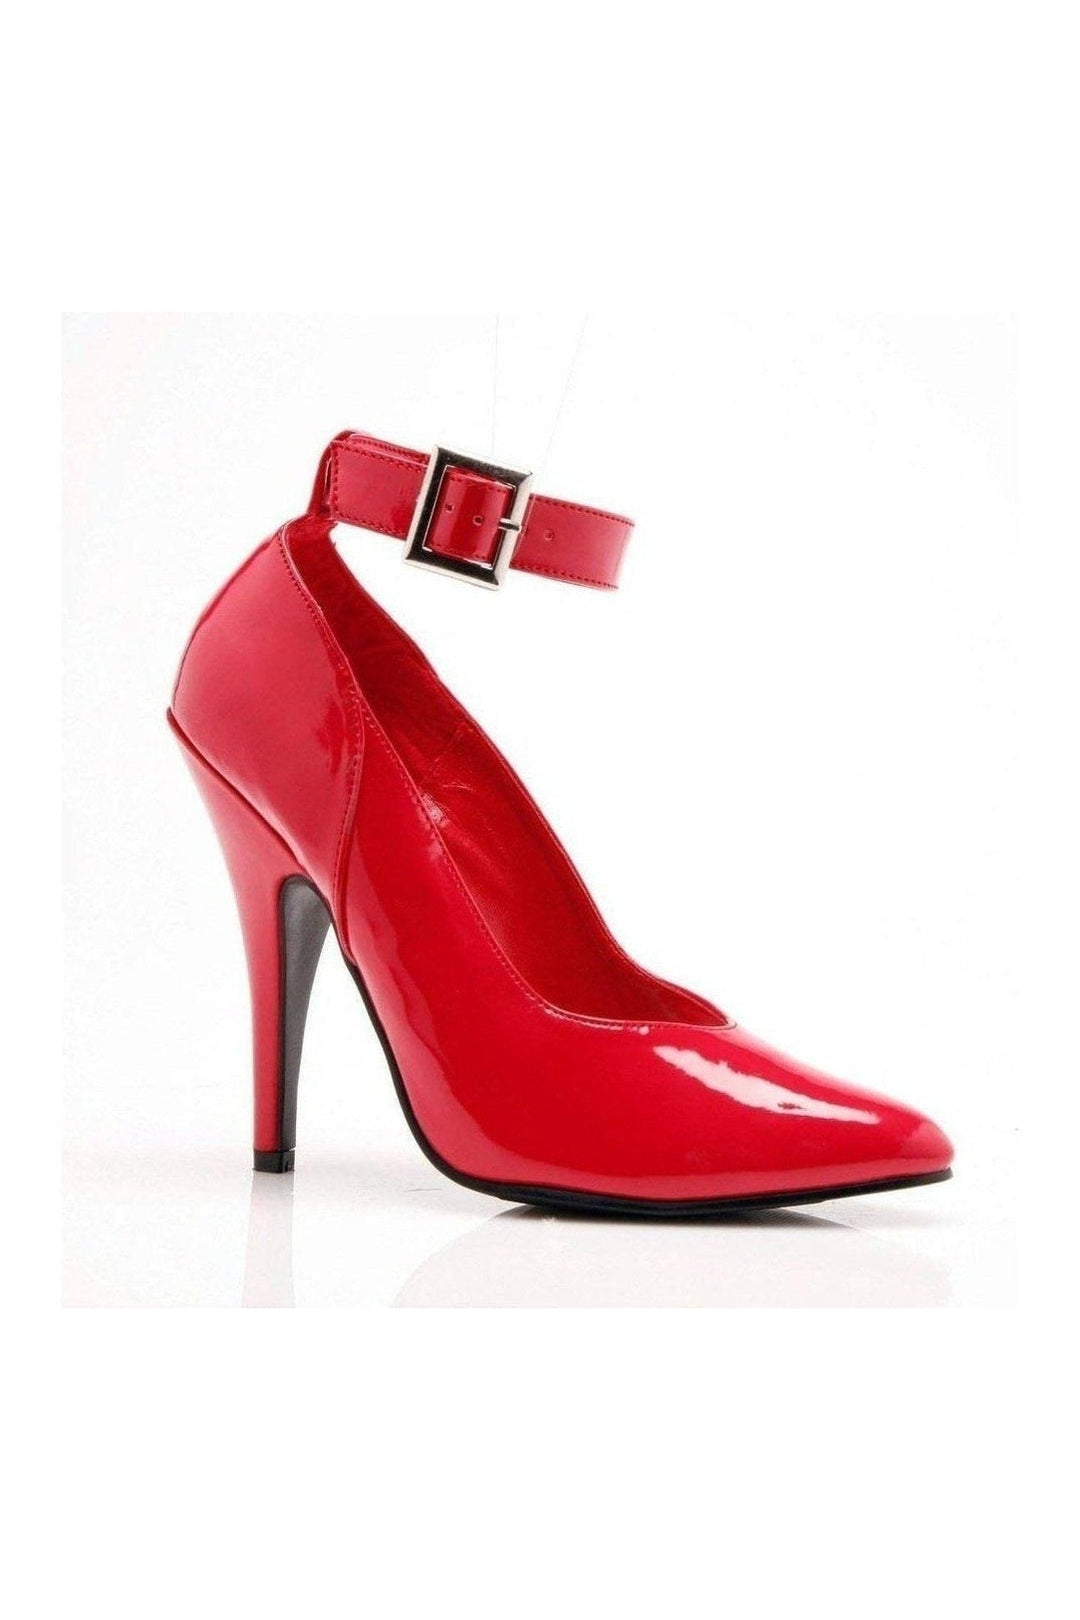 8221 Pump | Red Patent-Pumps- Stripper Shoes at SEXYSHOES.COM